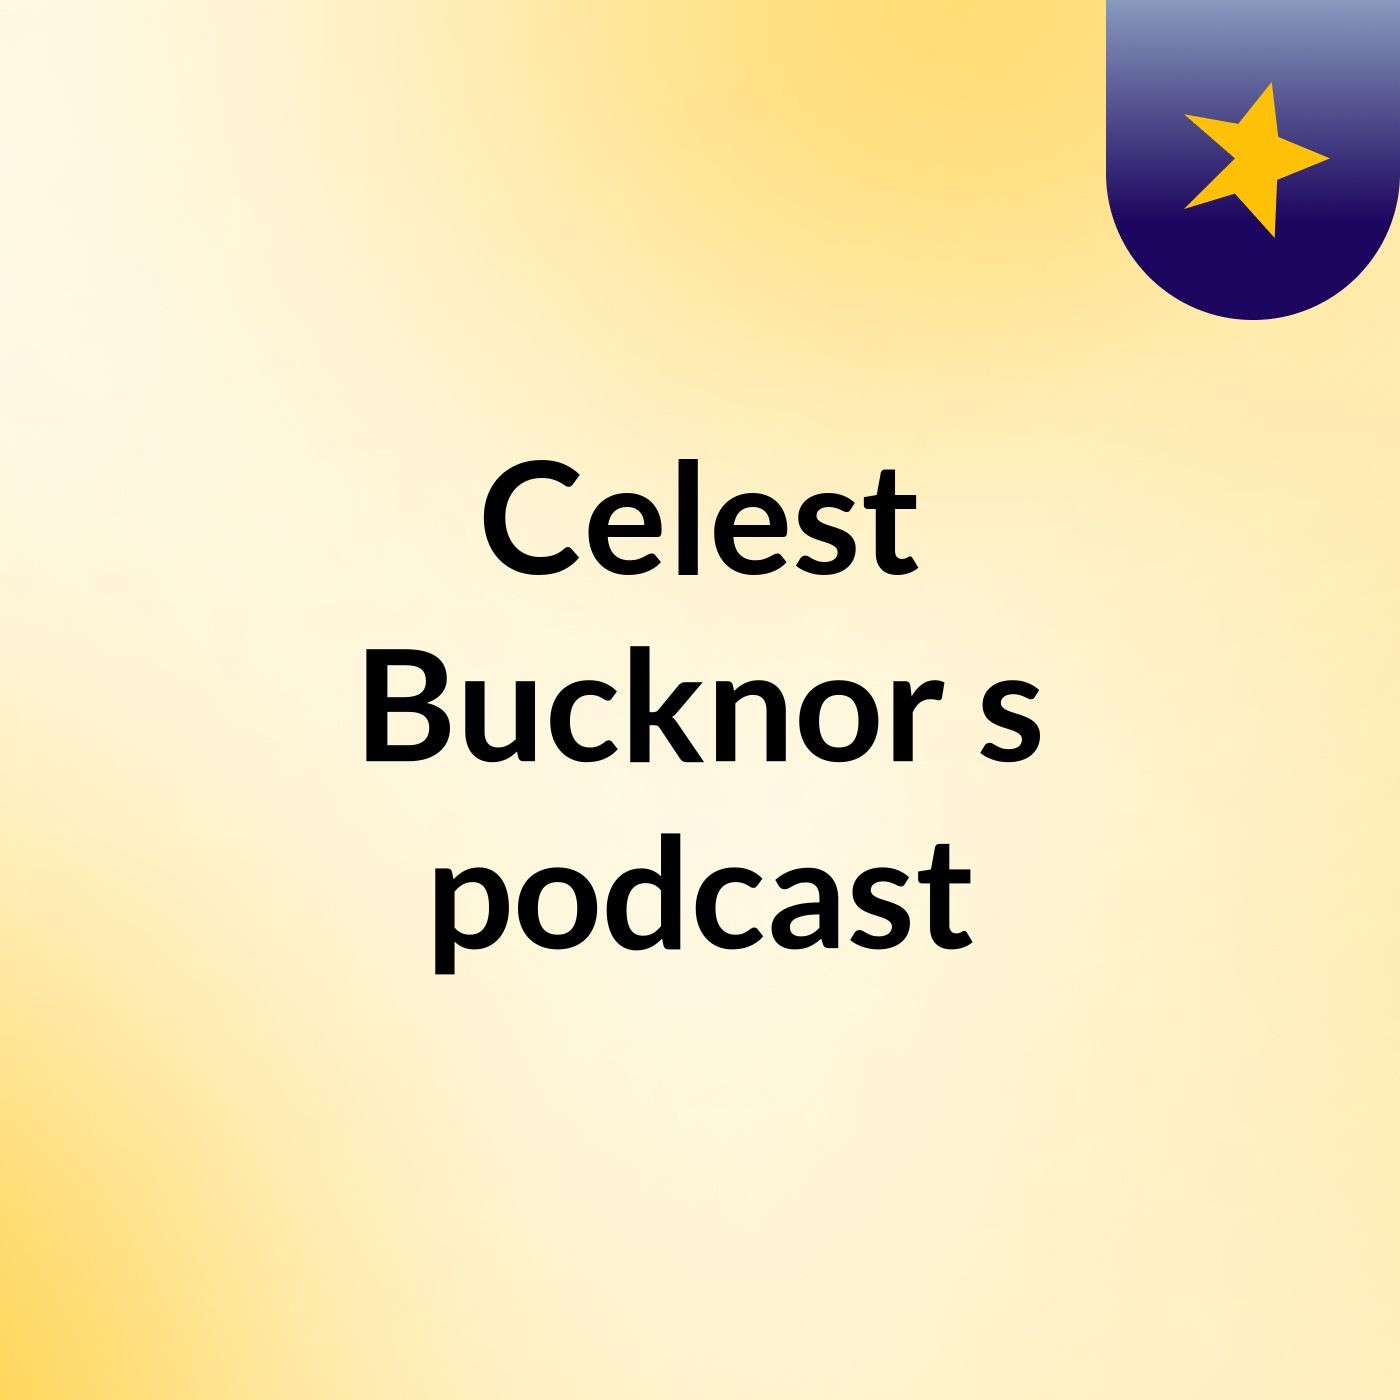 Celest Bucknor's podcast